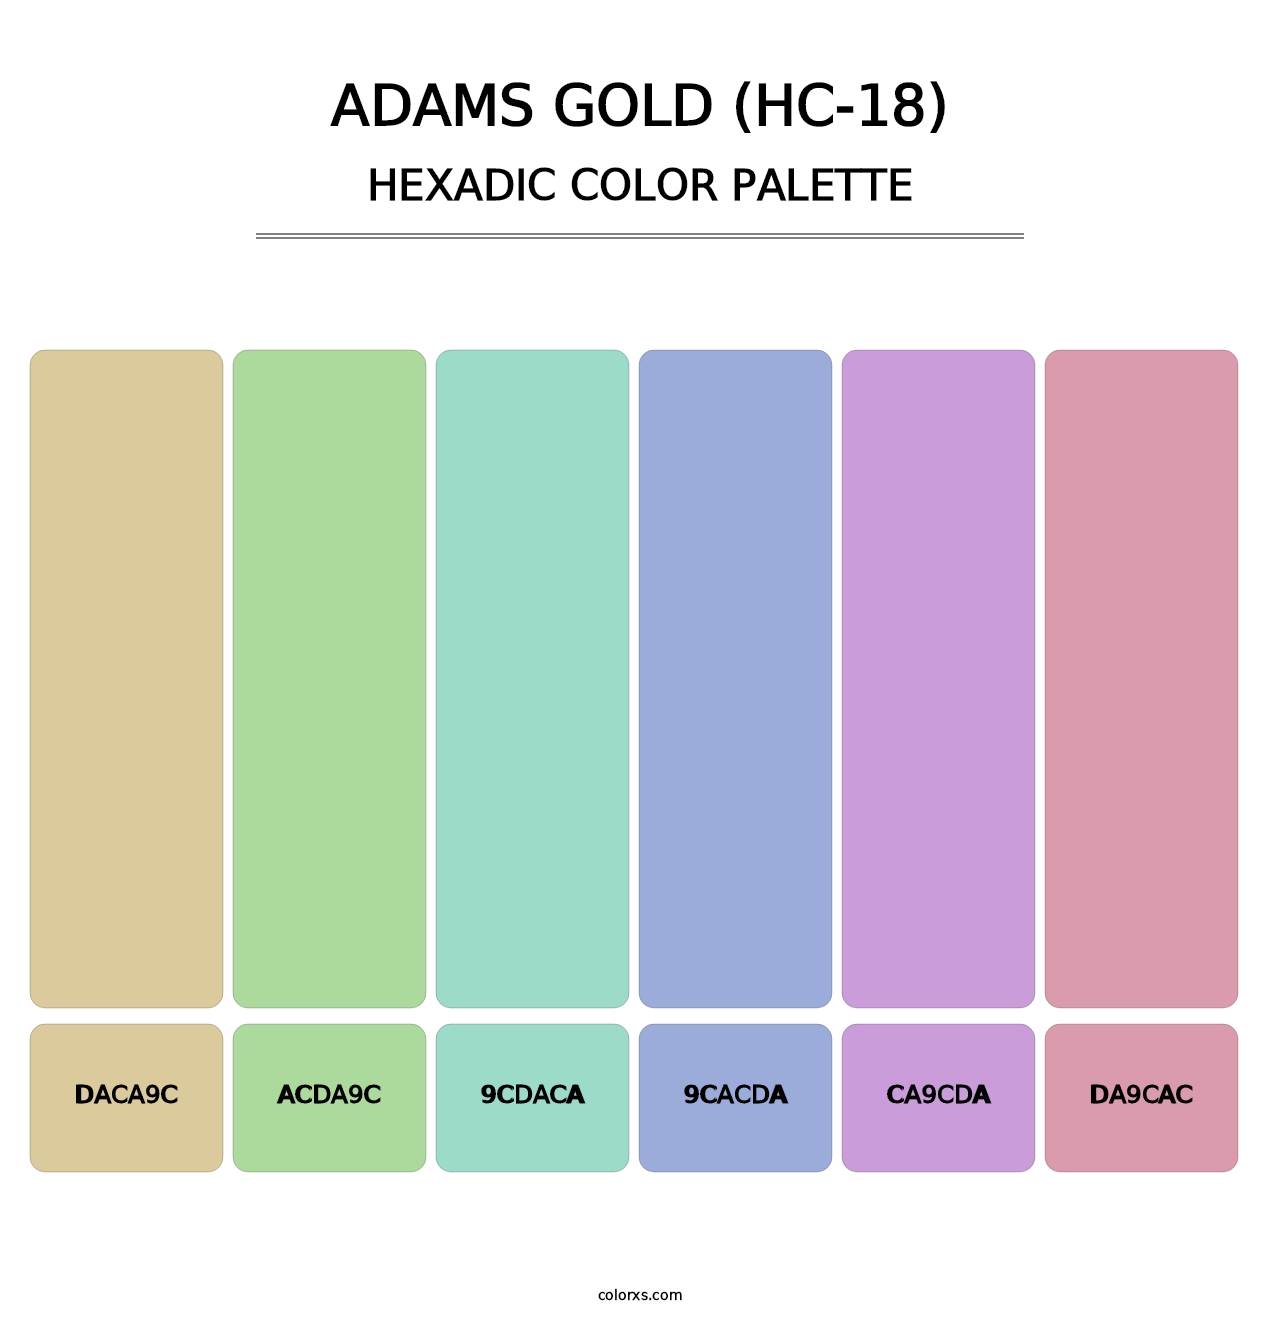 Adams Gold (HC-18) - Hexadic Color Palette